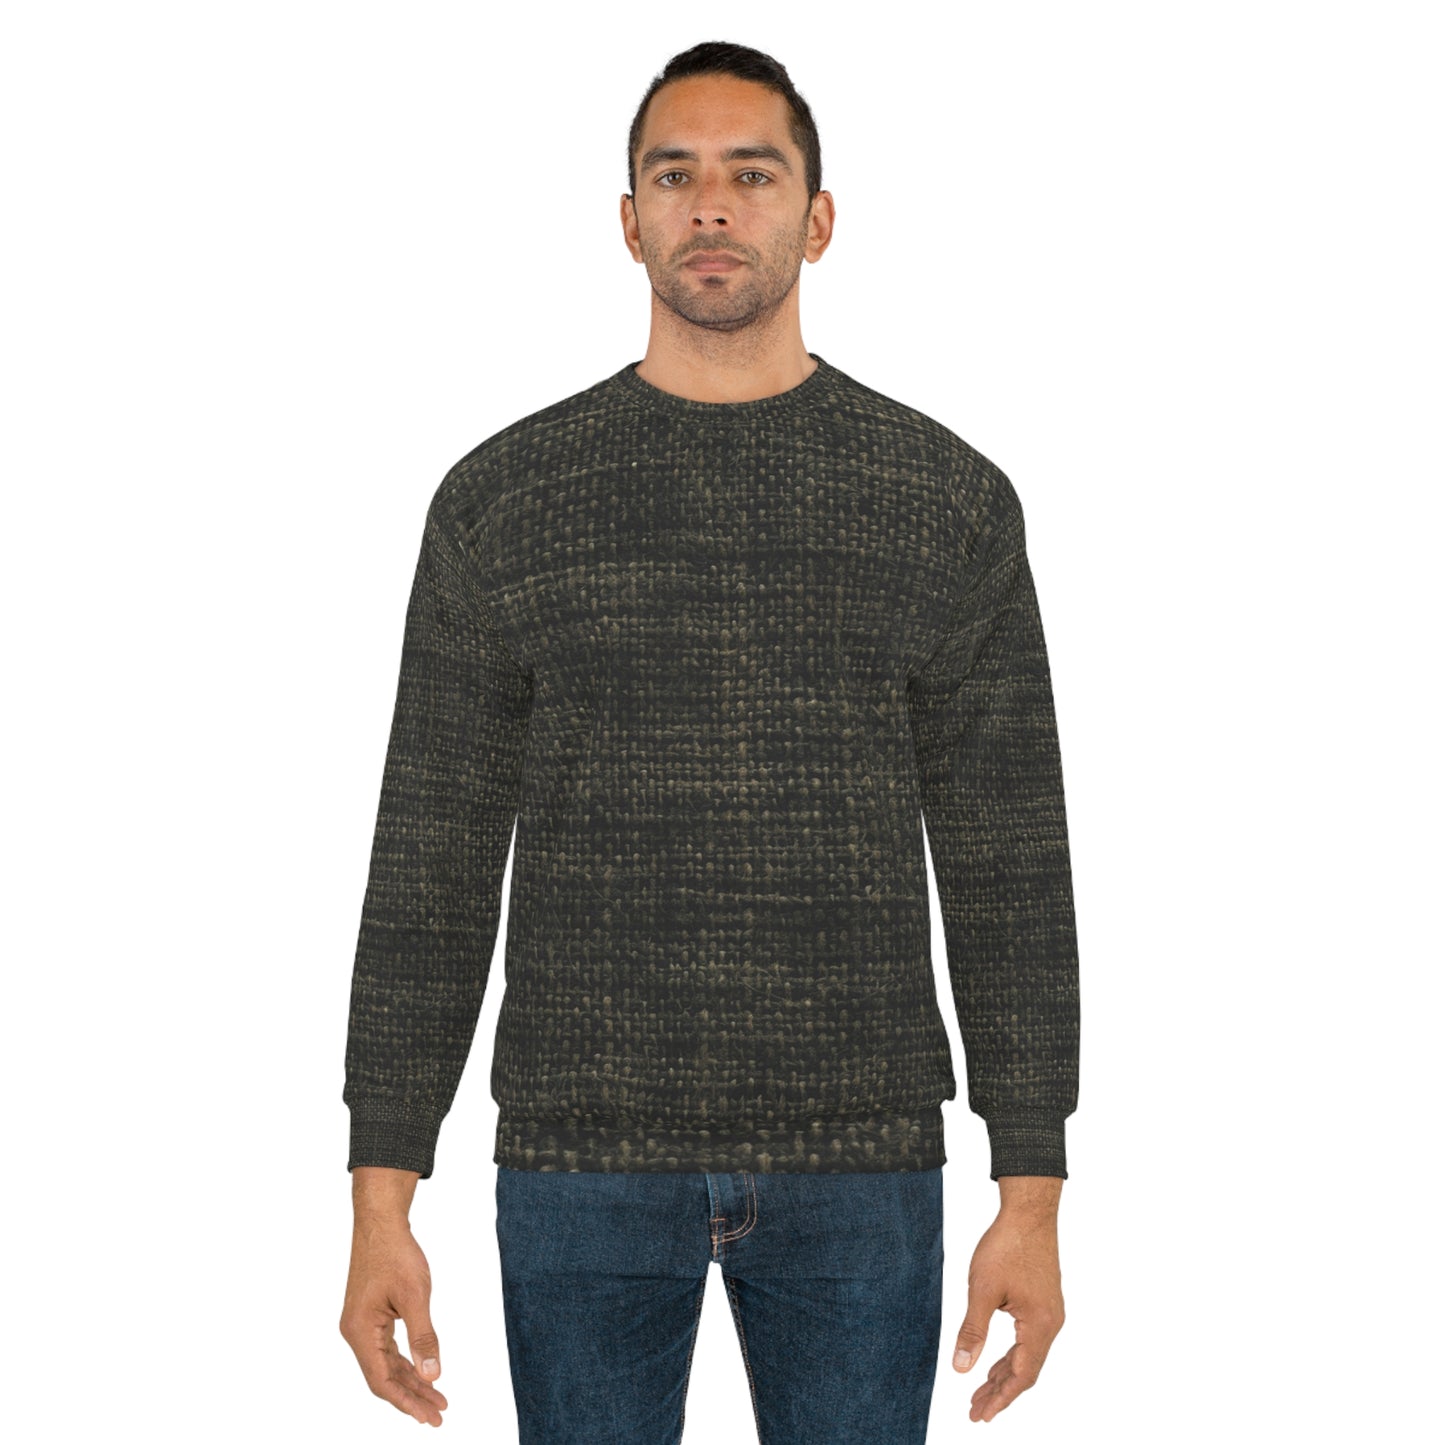 Sophisticated Seamless Texture - Black Denim-Inspired Fabric - Unisex Sweatshirt (AOP)